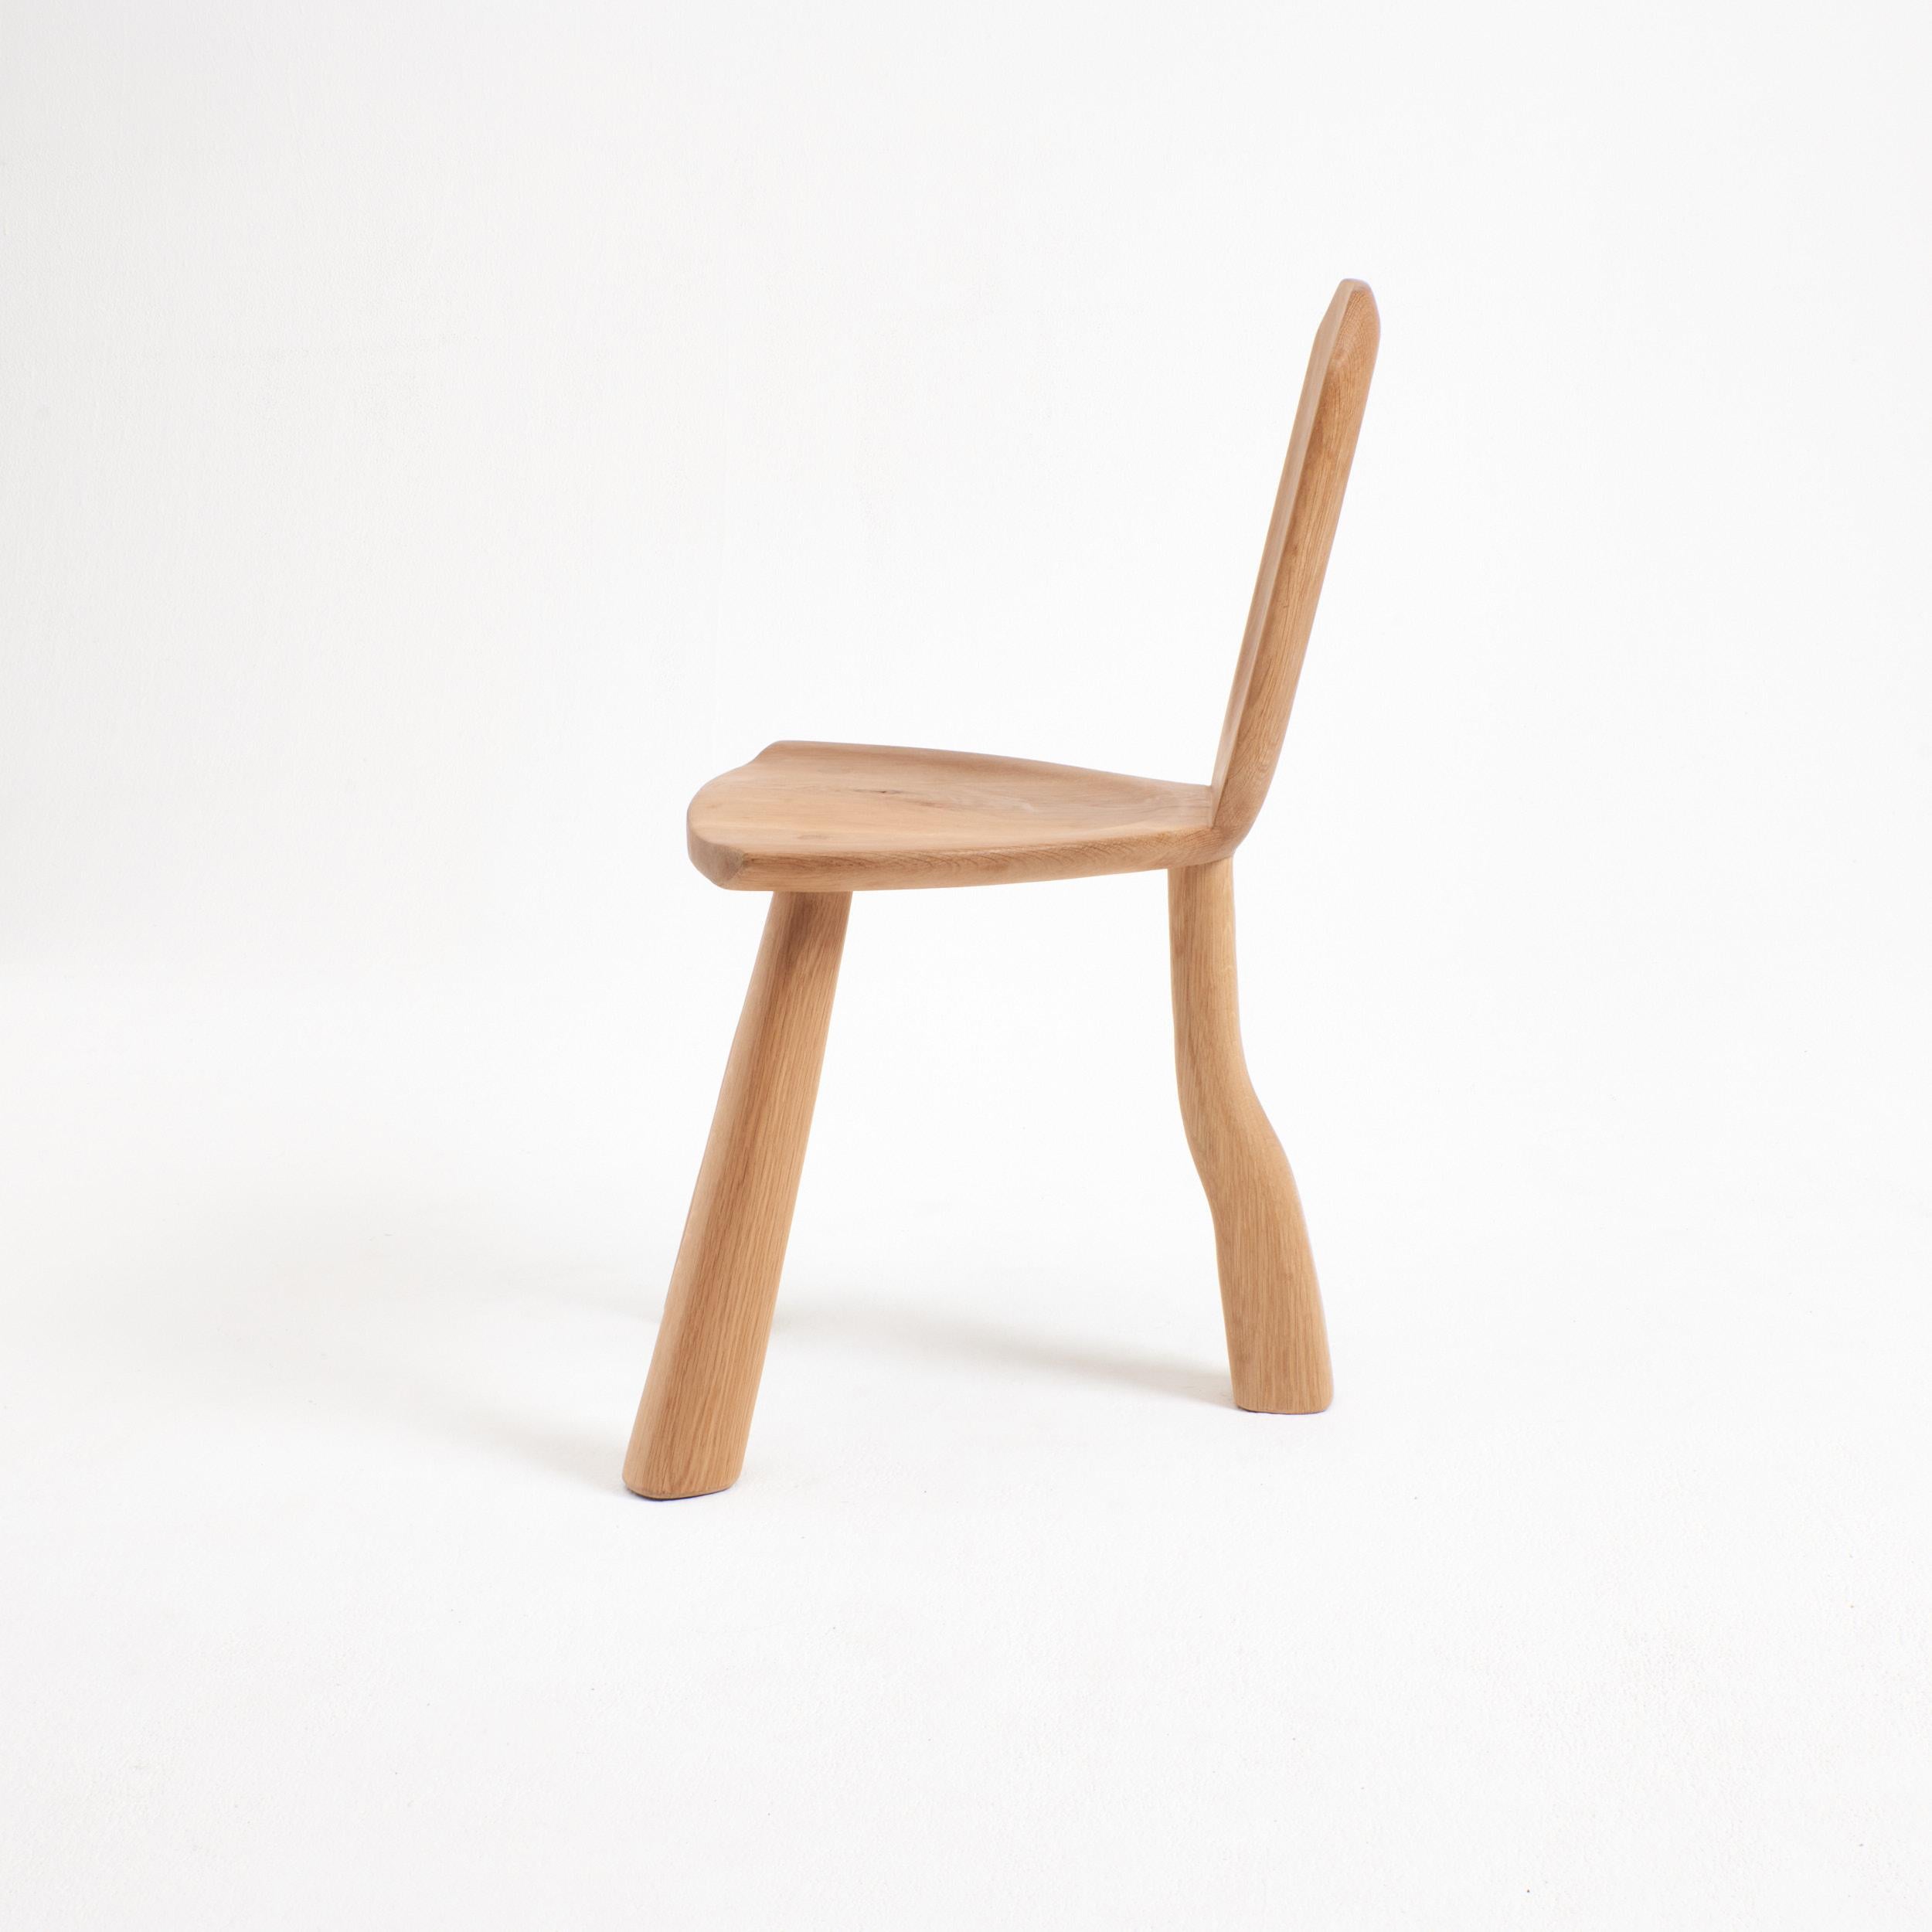 Portuguese Accent Chair in oak For Sale